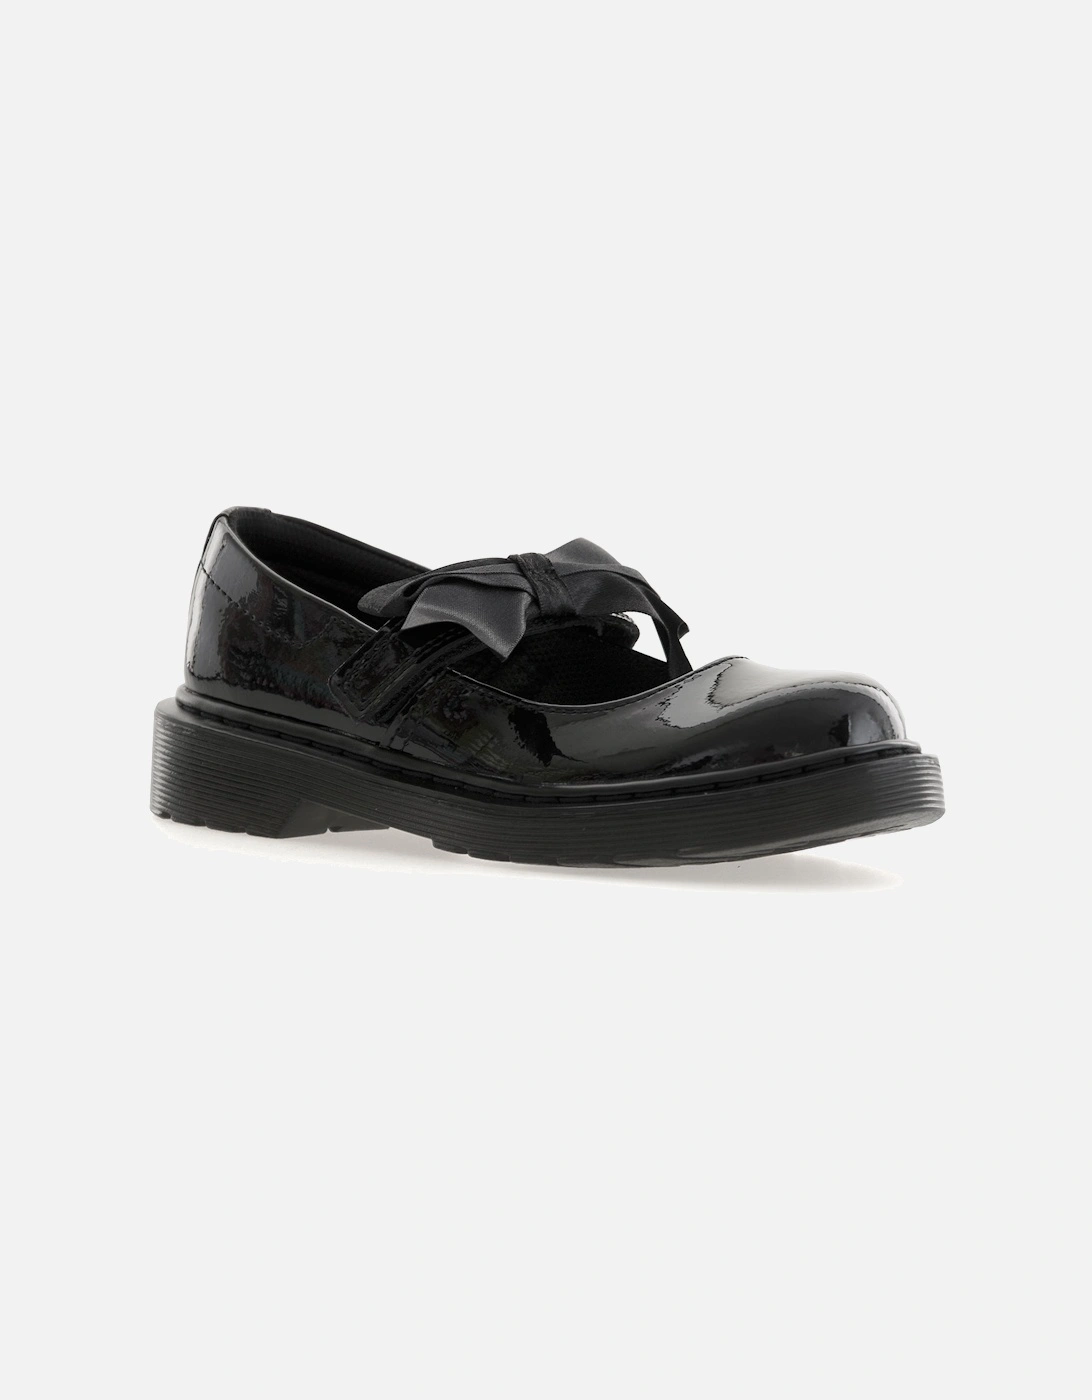 Dr. Martens Juniors Maccy 2 Shoes (Black), 6 of 5